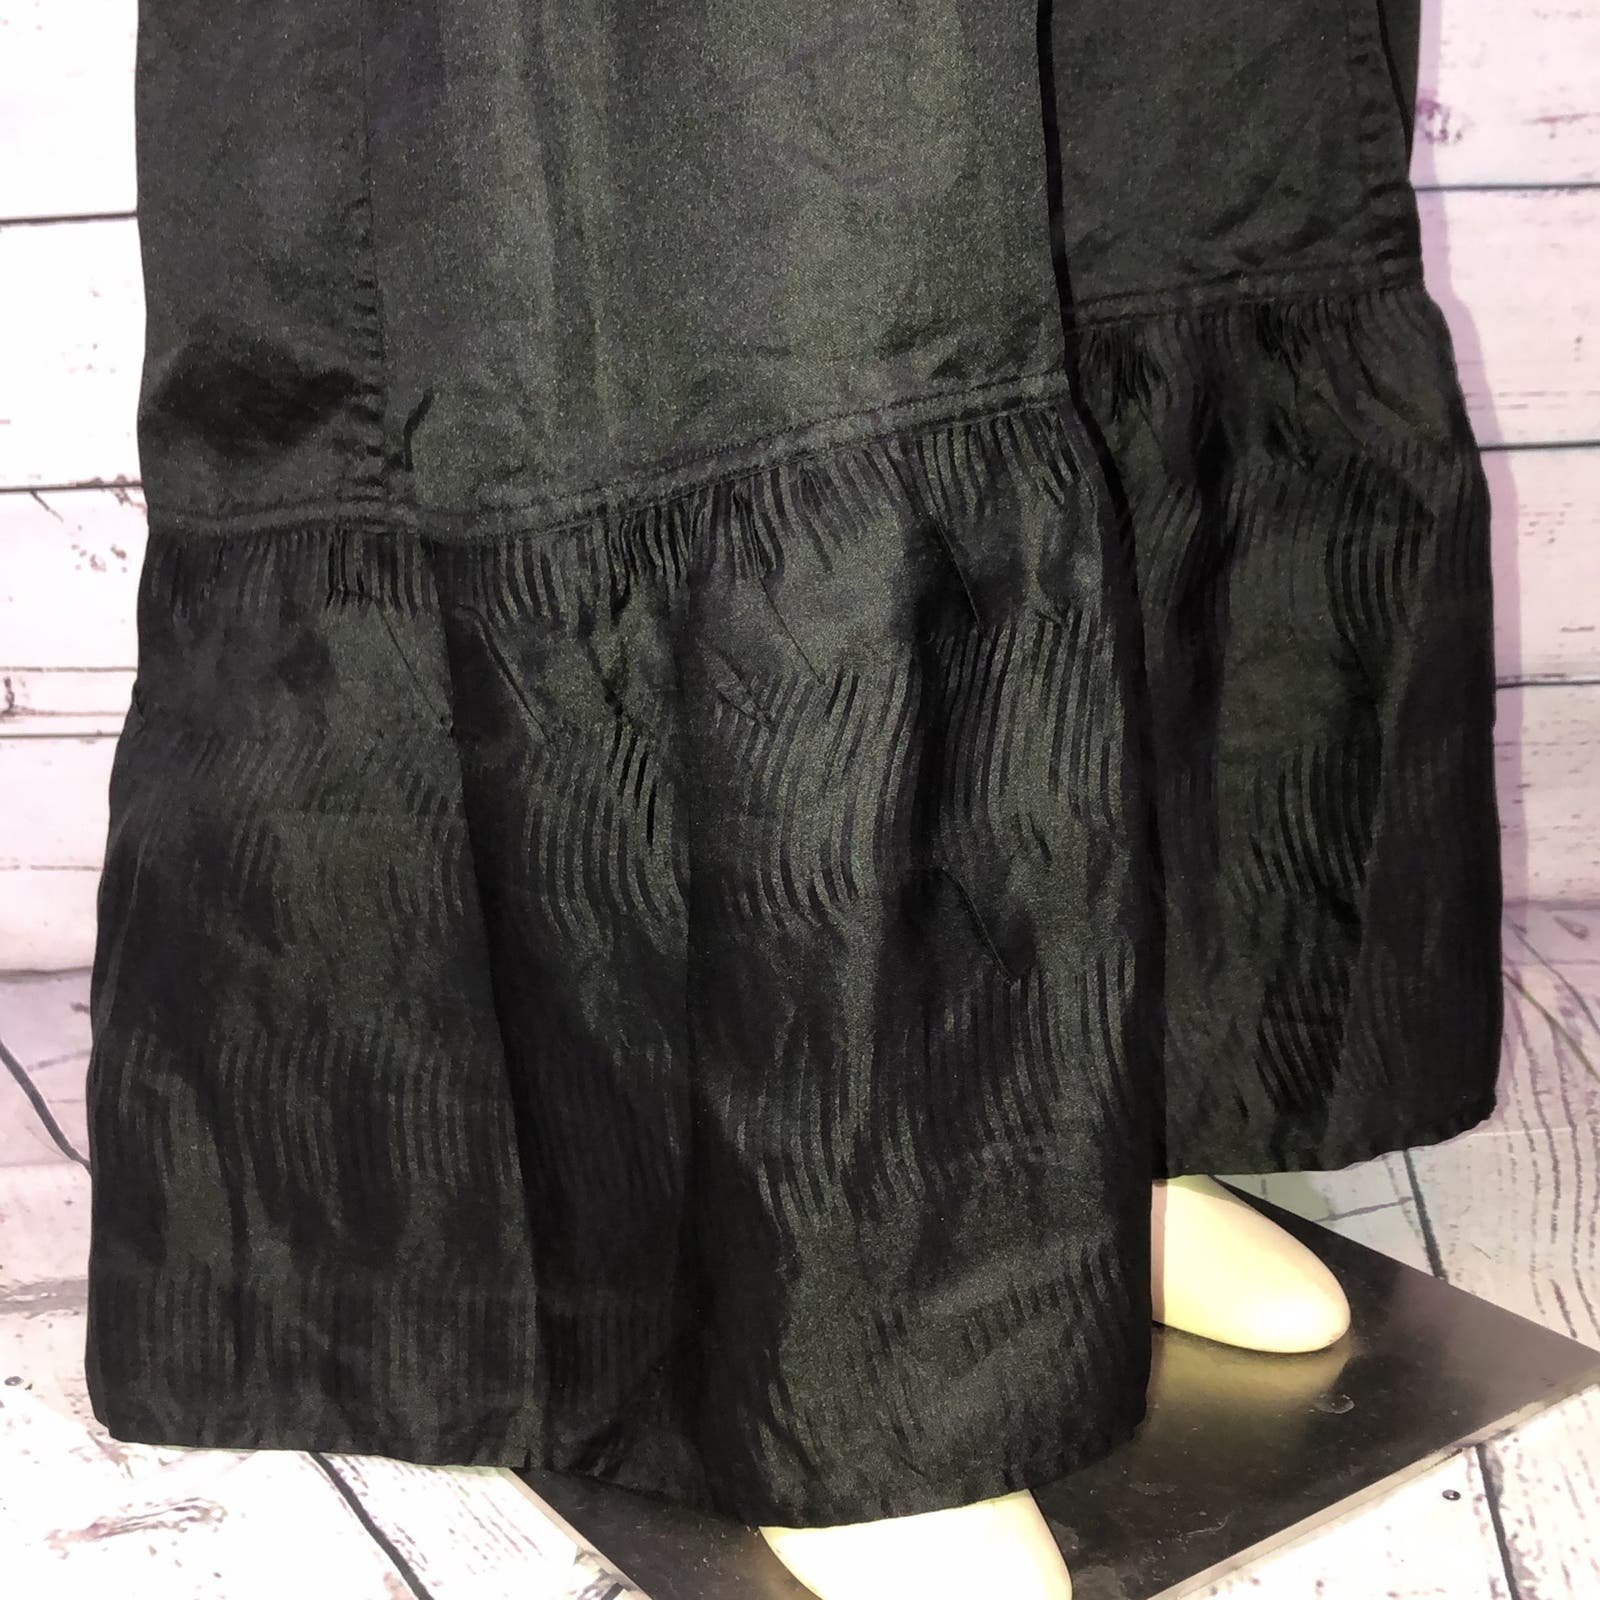 floor price American Vintage black maxi underskirt black with adjustable waist fhn7k5UkG Wholesale